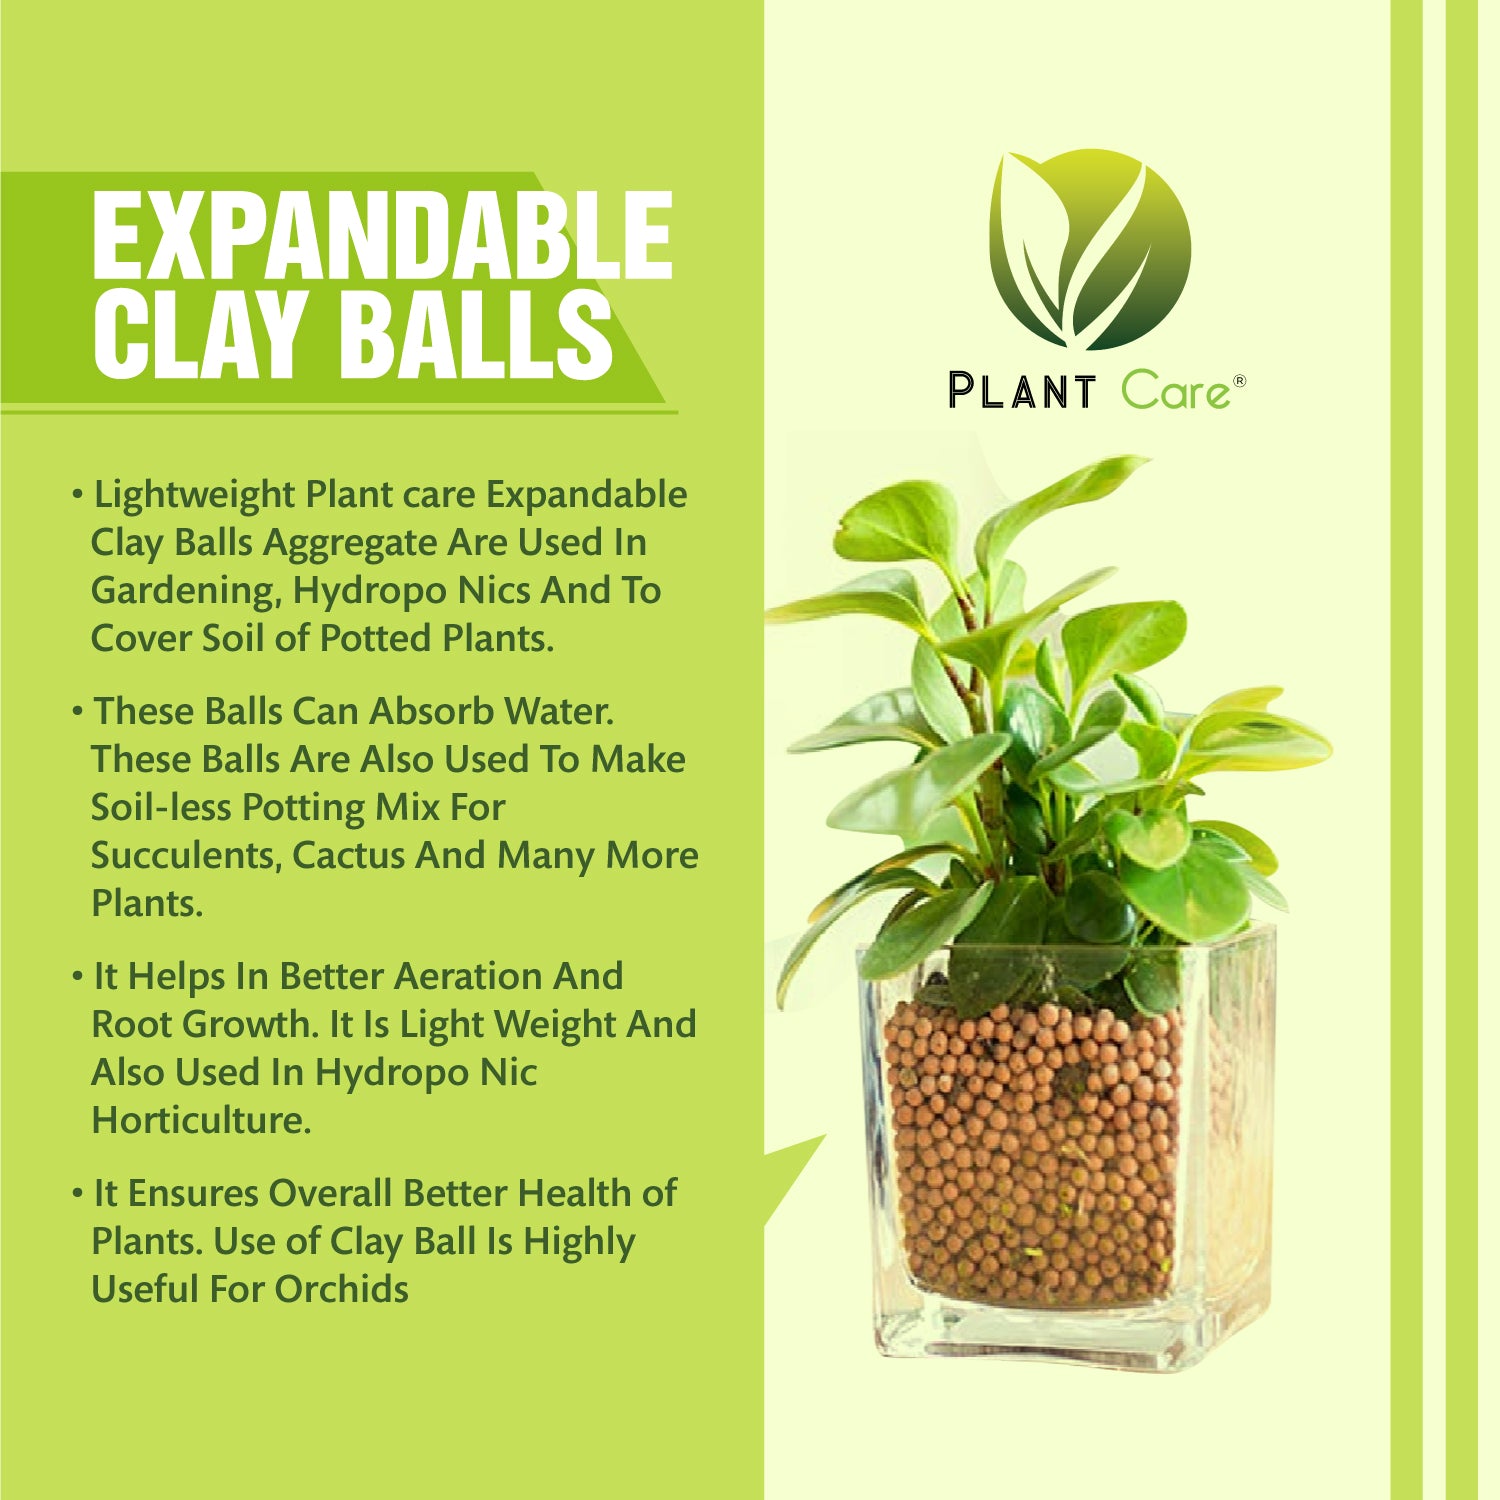 Expandable clay balls